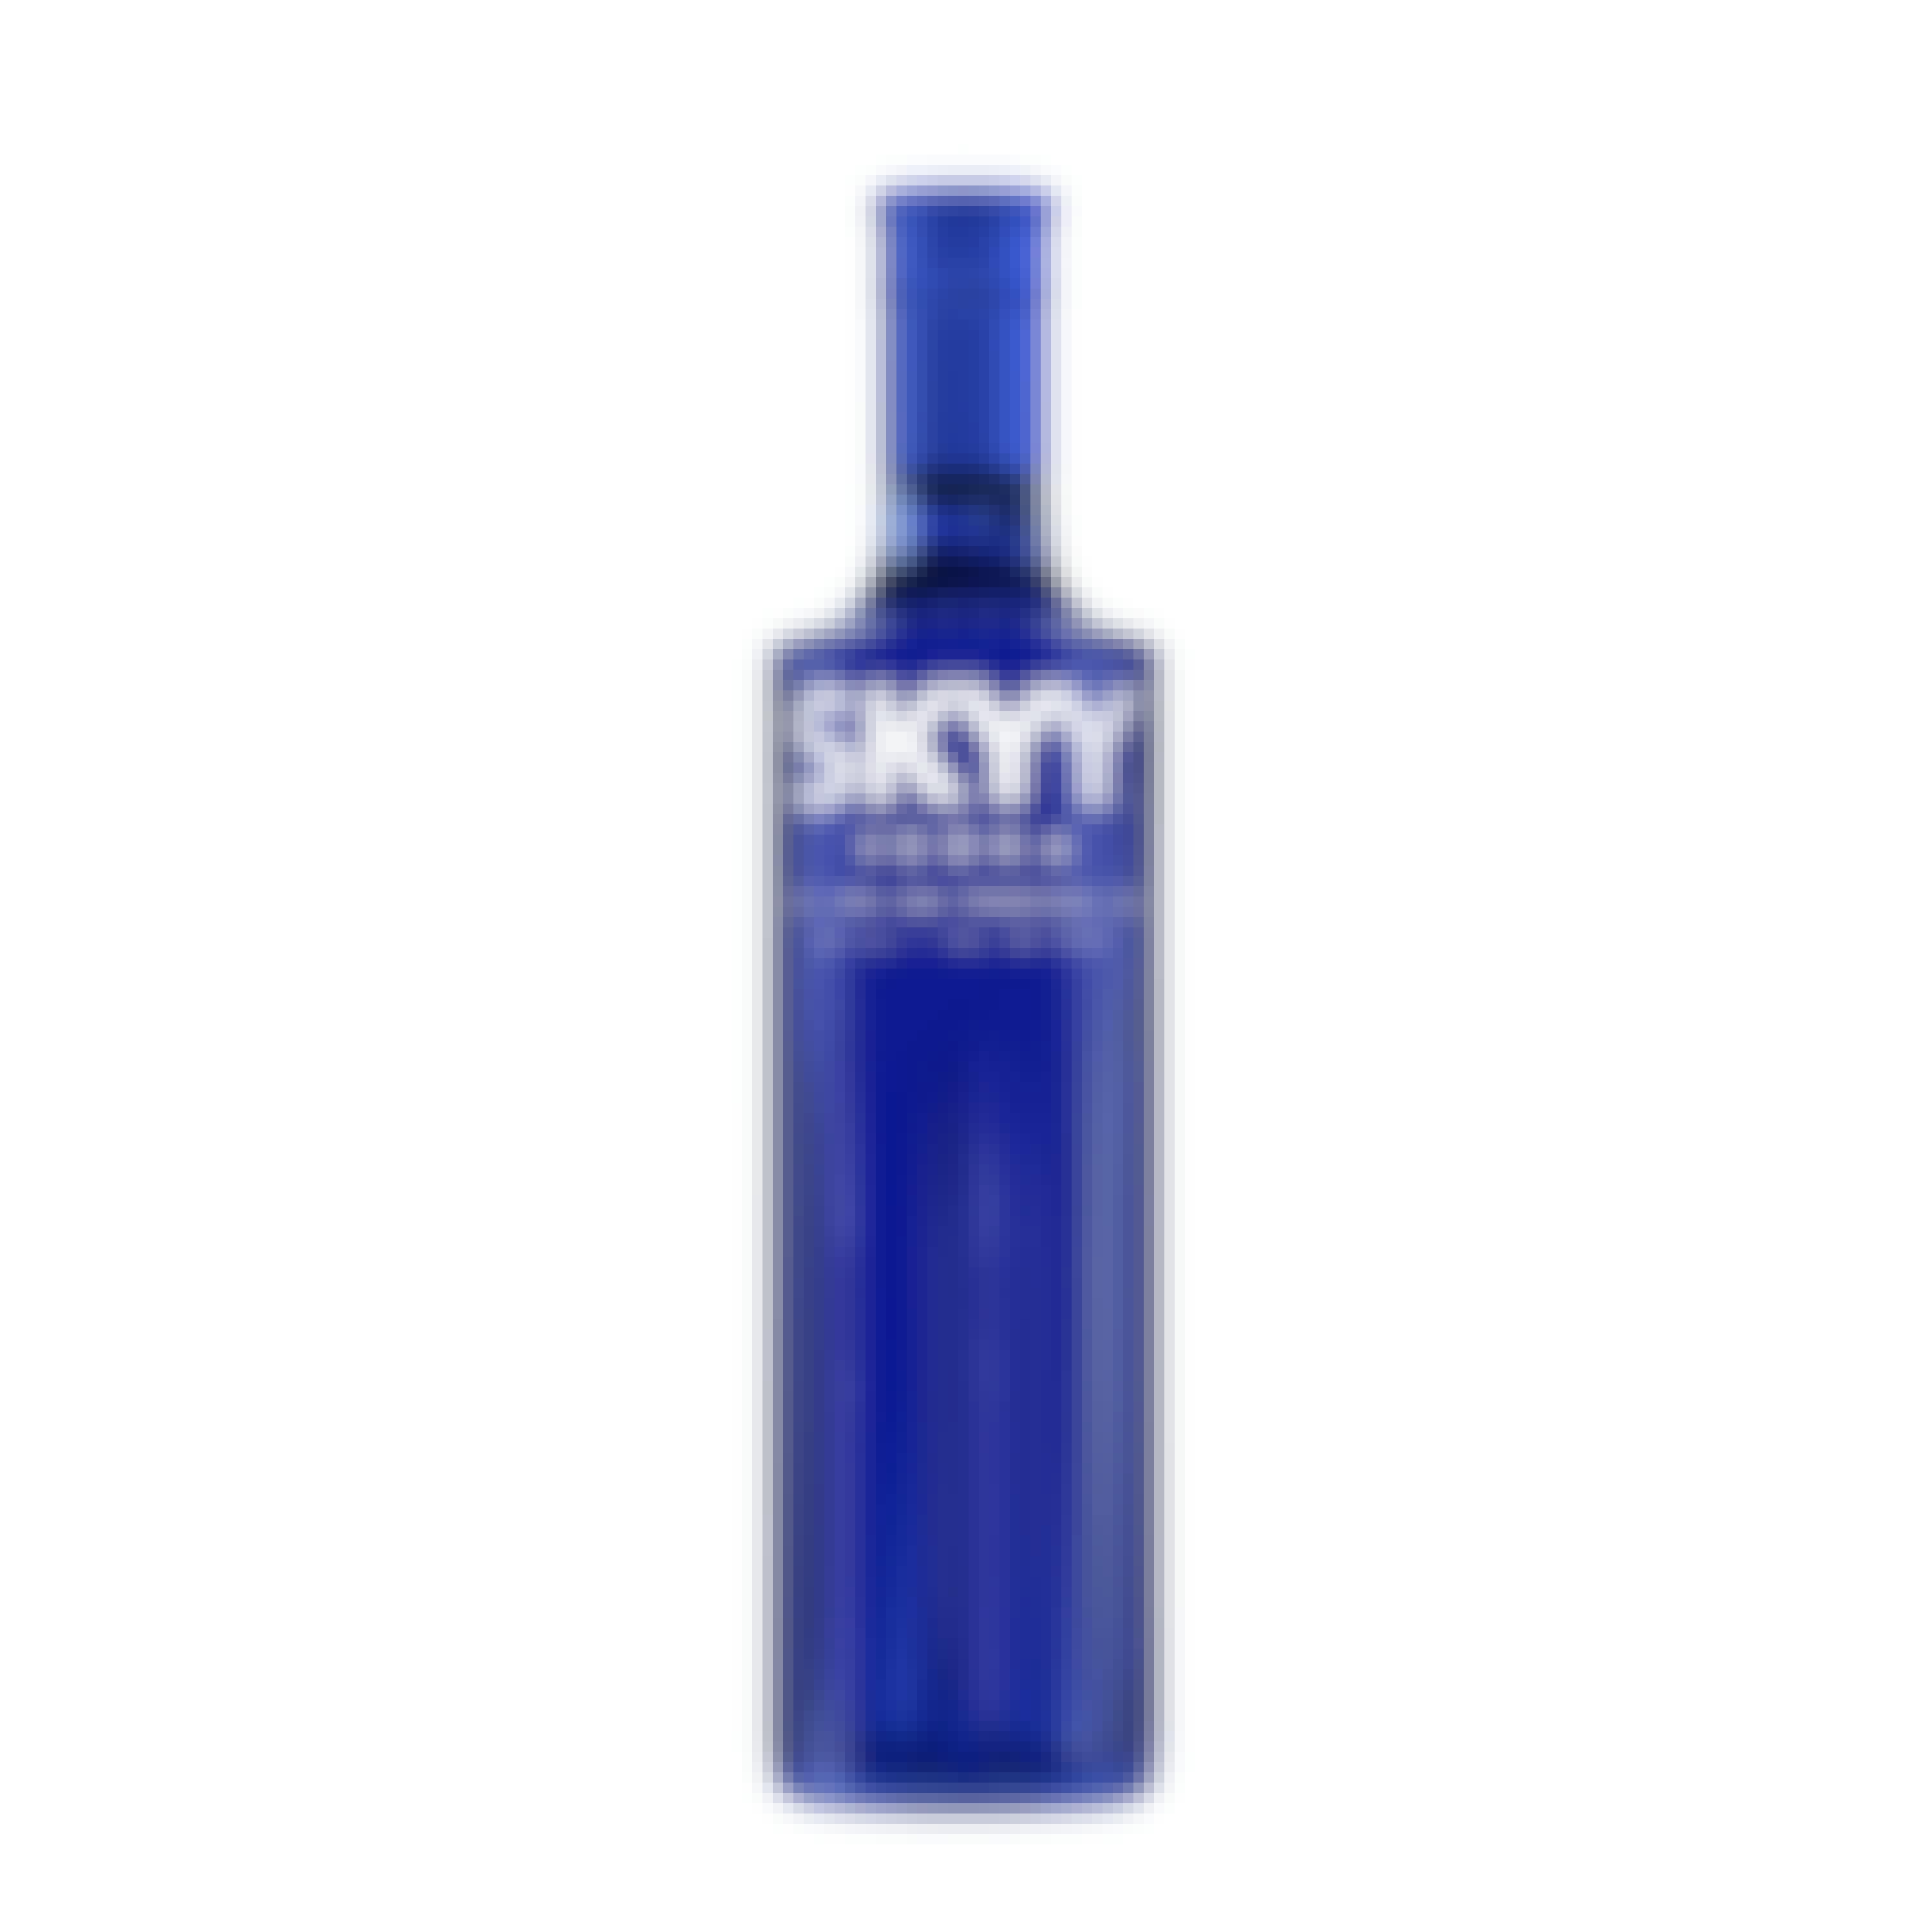 Skyy Vodka 1.75L